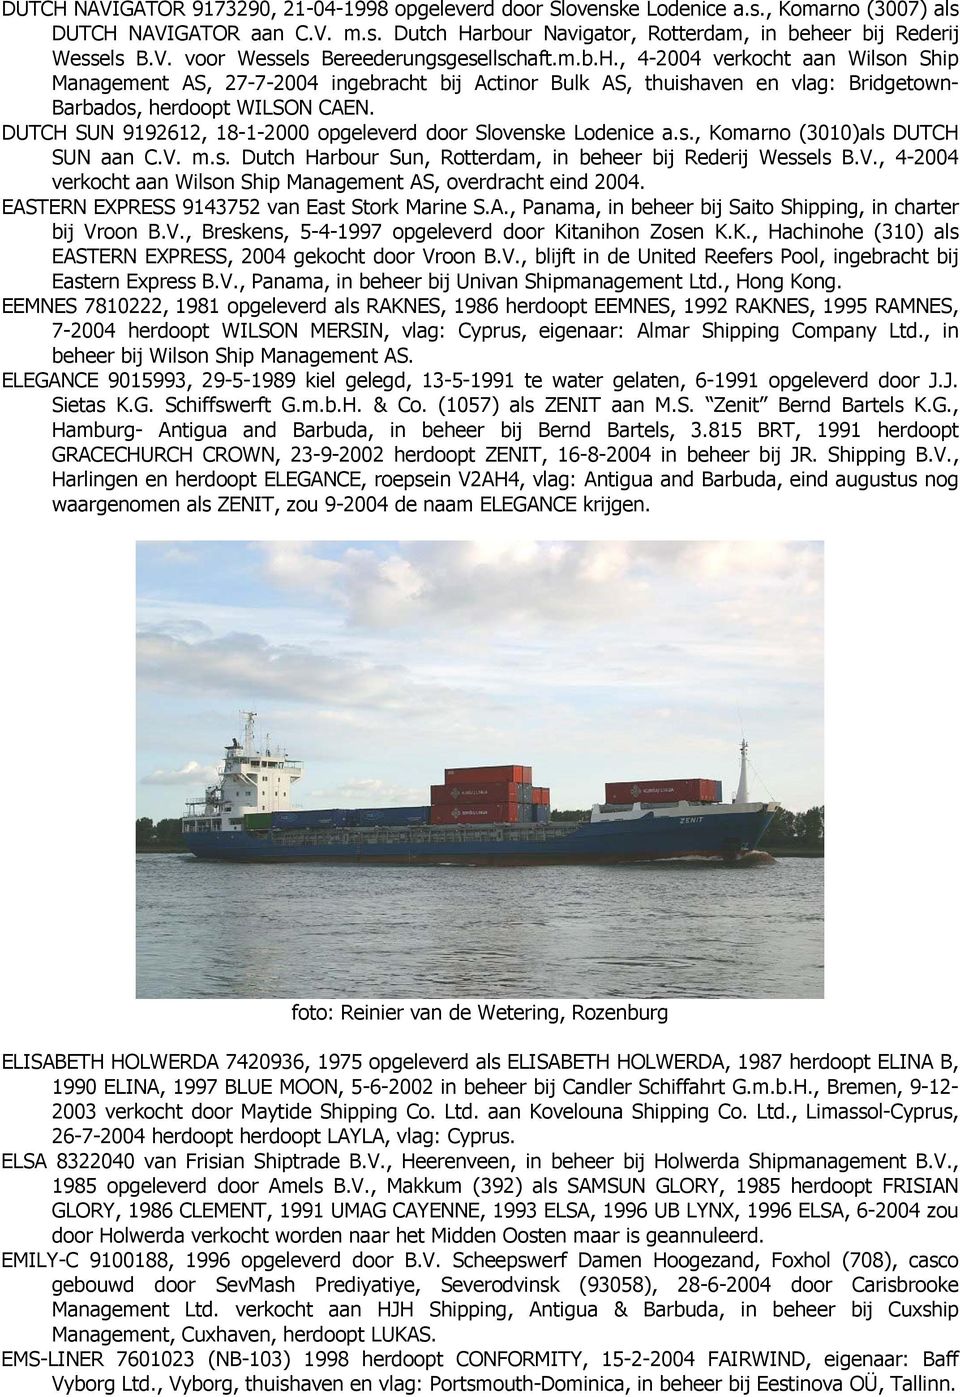 DUTCH SUN 9192612, 18-1-2000 opgeleverd door Slovenske Lodenice a.s., Komarno (3010)als DUTCH SUN aan C.V. m.s. Dutch Harbour Sun, Rotterdam, in beheer bij Rederij Wessels B.V., 4-2004 verkocht aan Wilson Ship Management AS, overdracht eind 2004.